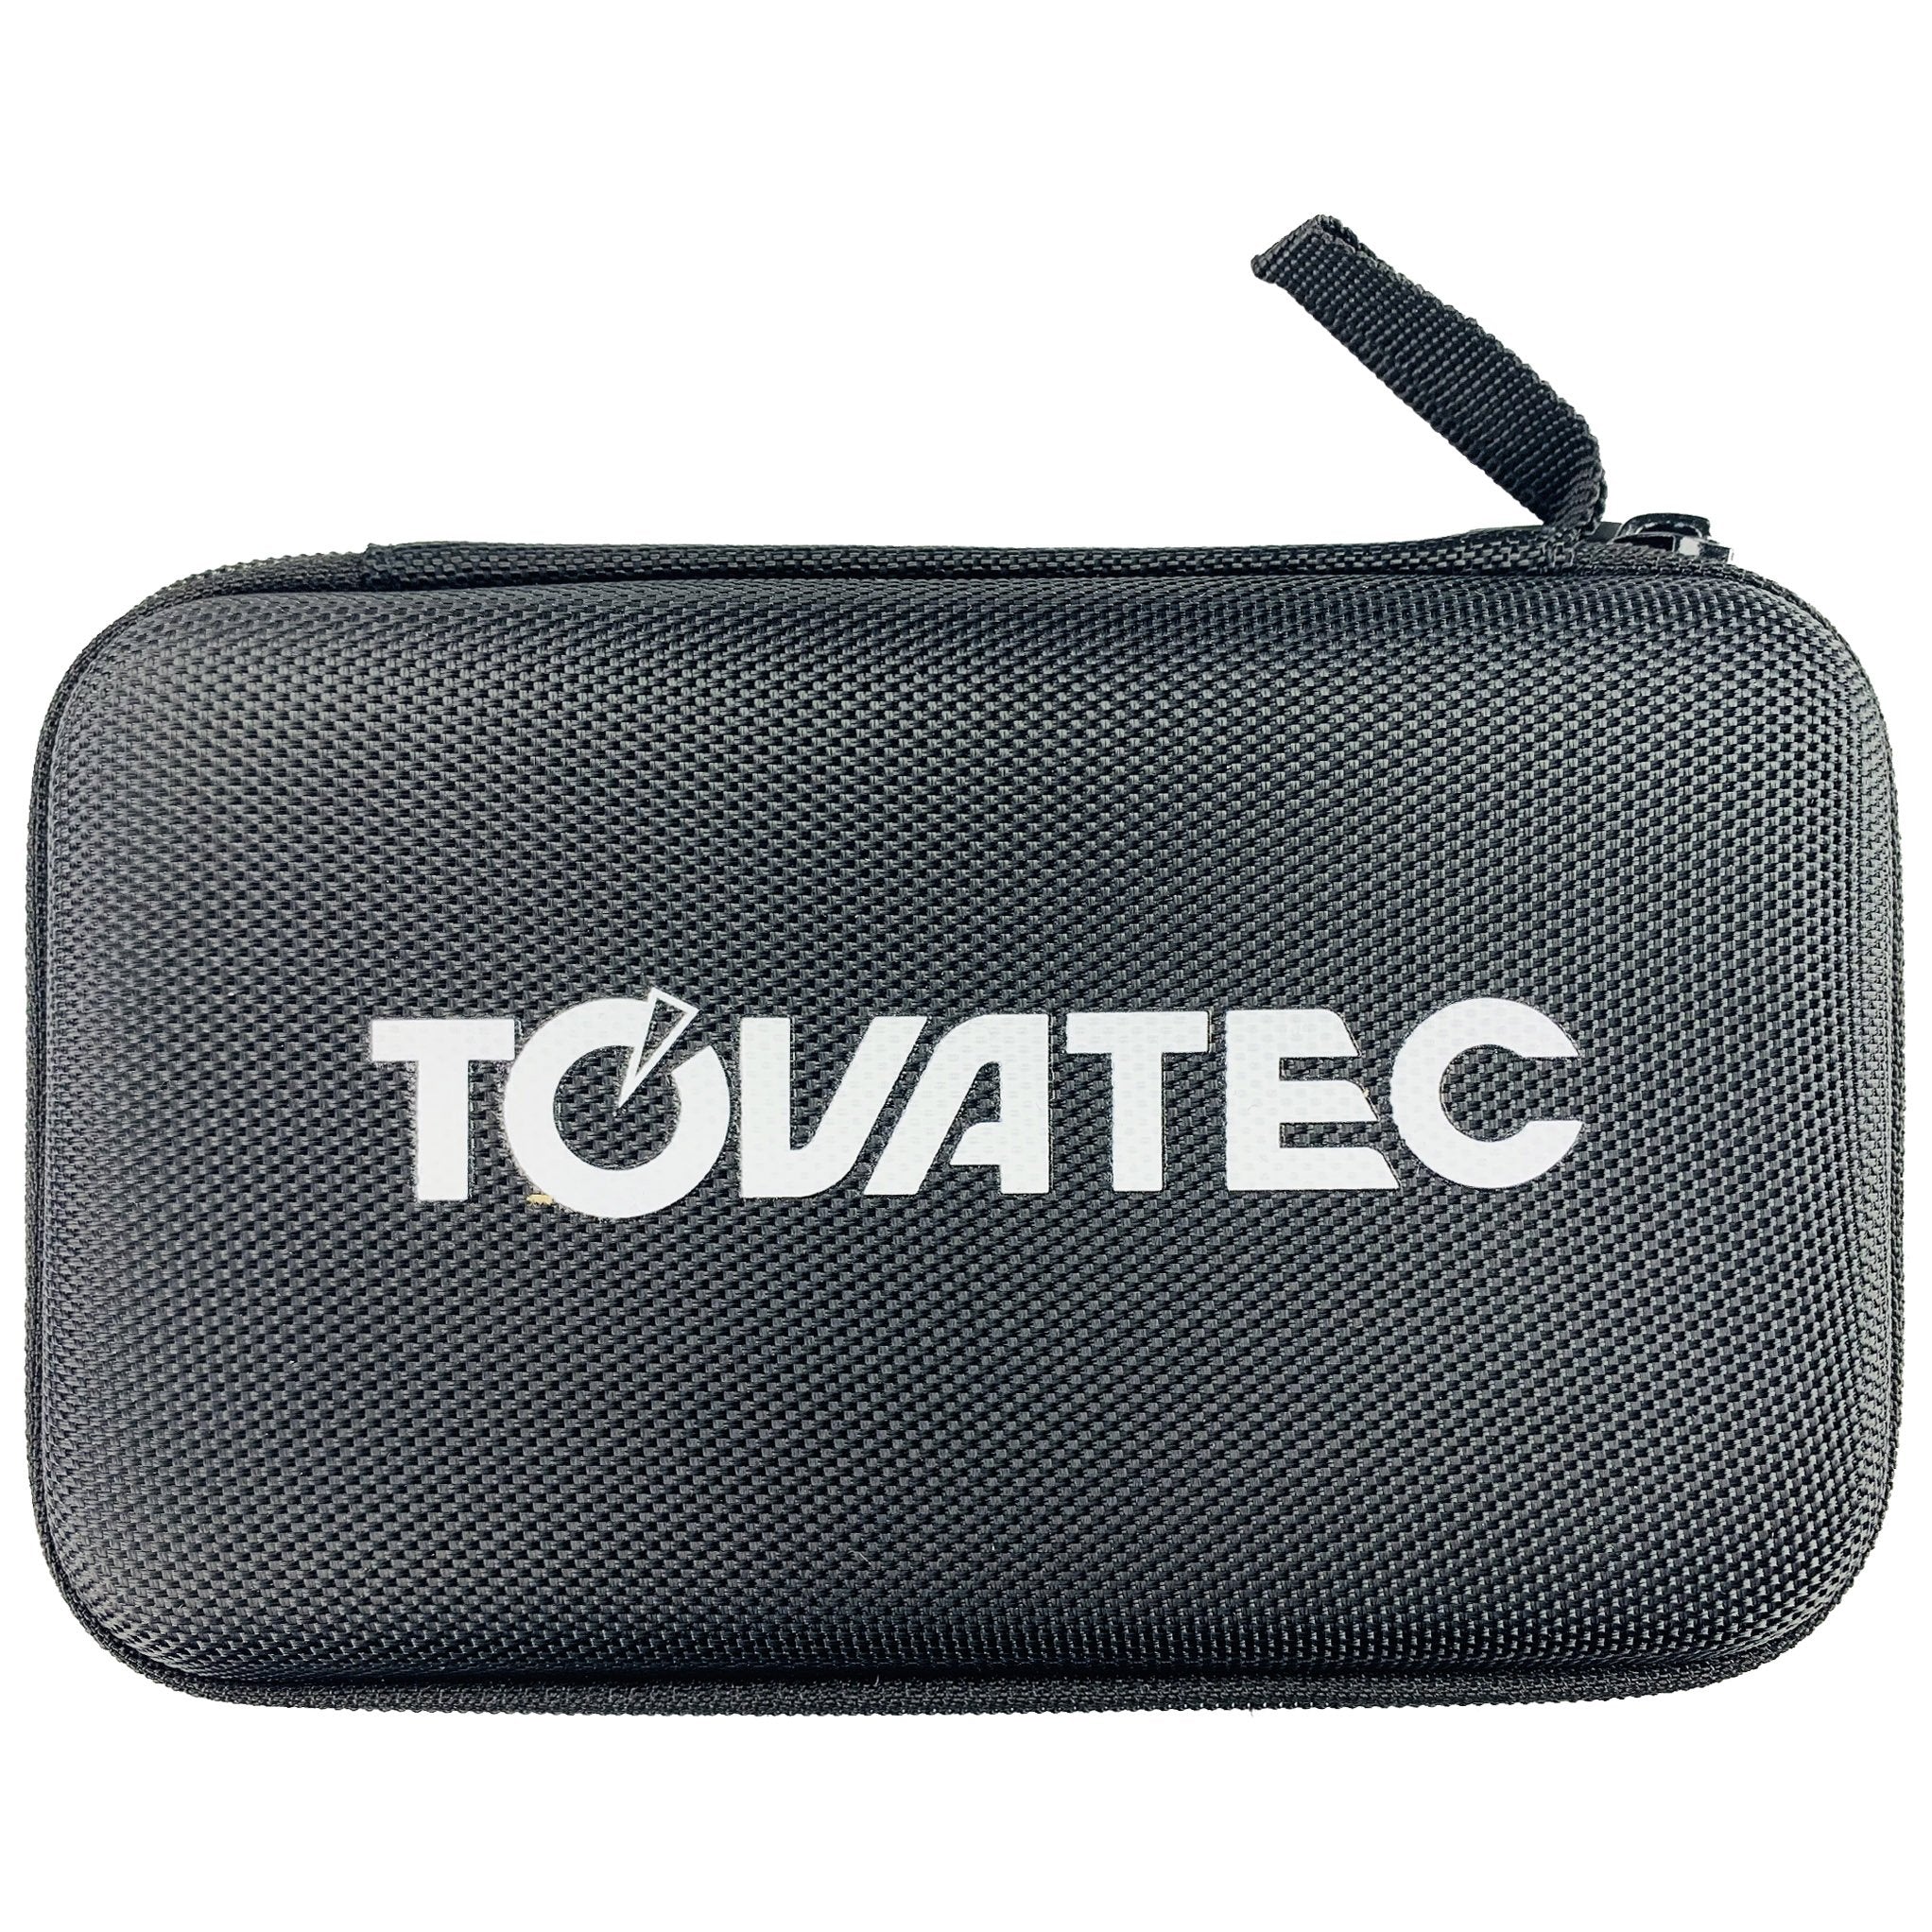 Tovatec T1000 Spot Light Dive Torch Storage Case